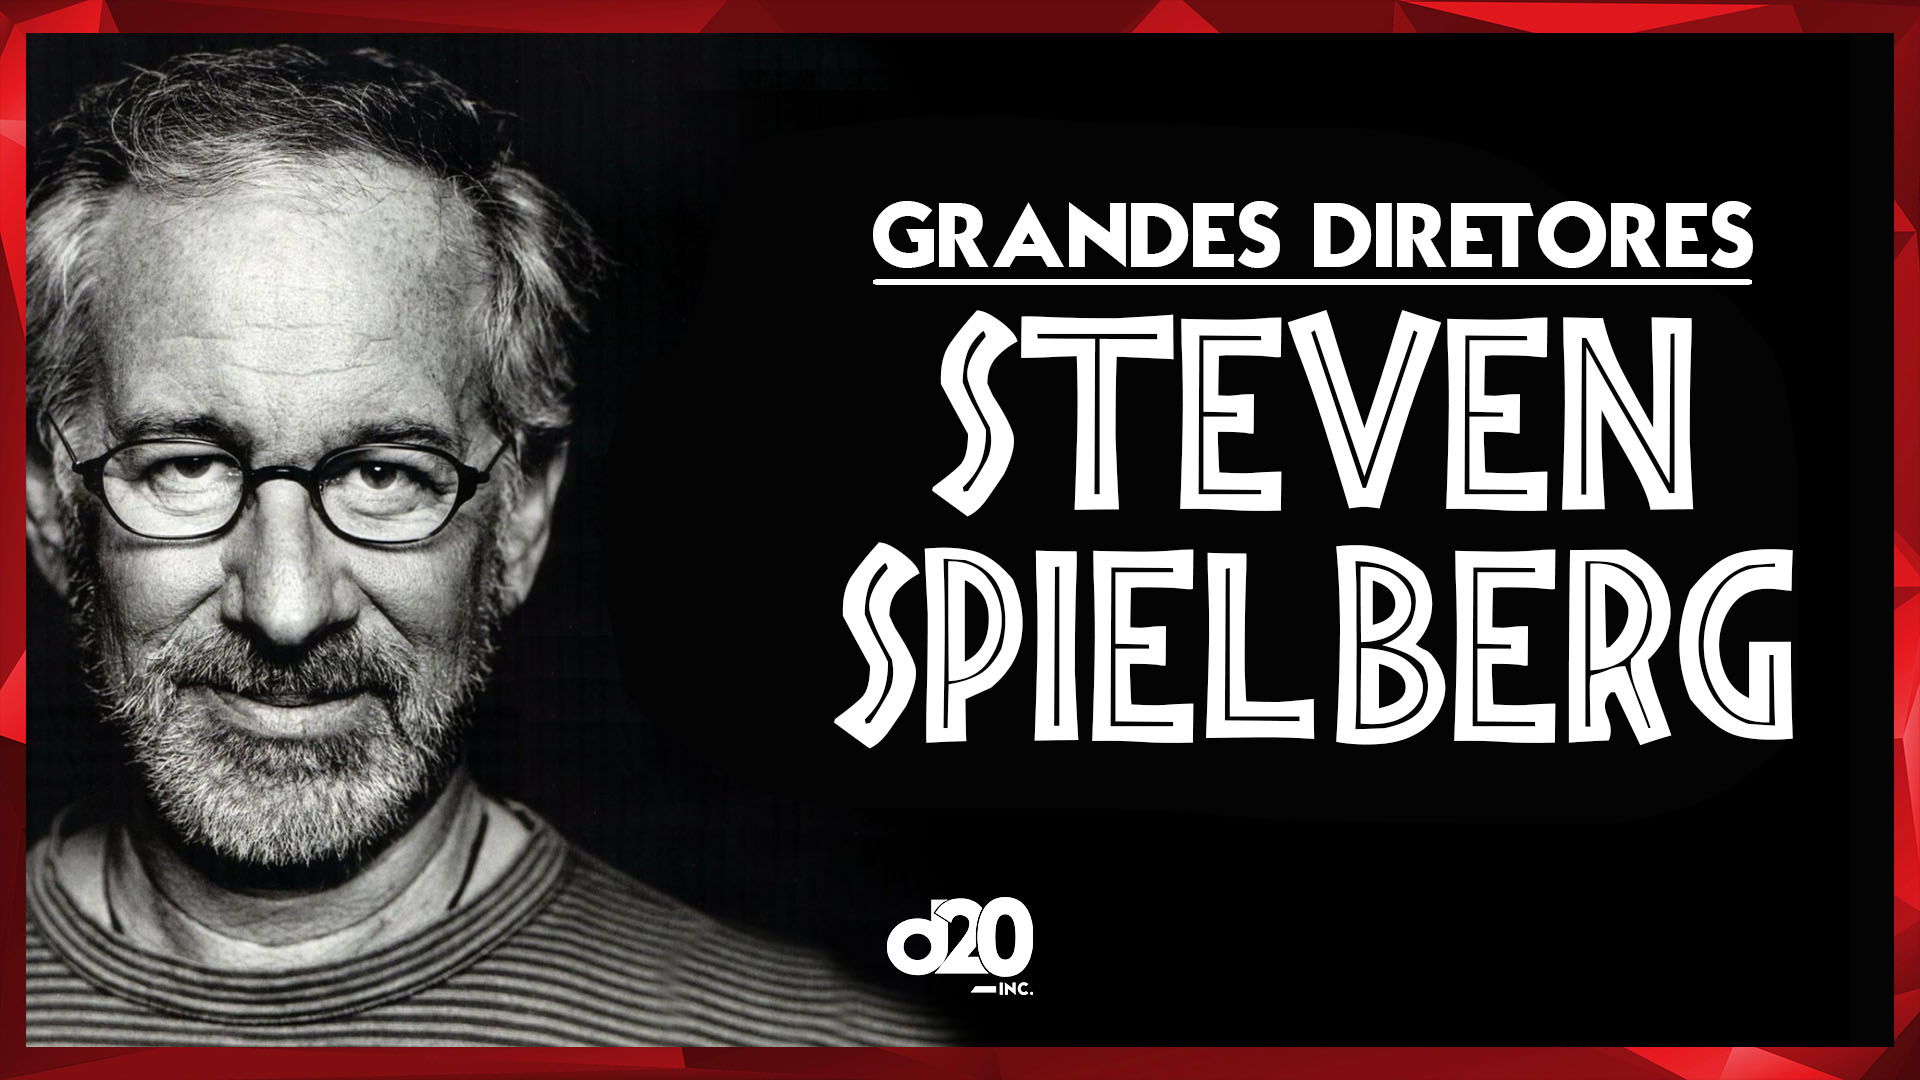 Steven Spielberg (Grandes Diretores) | D20 Lab 15